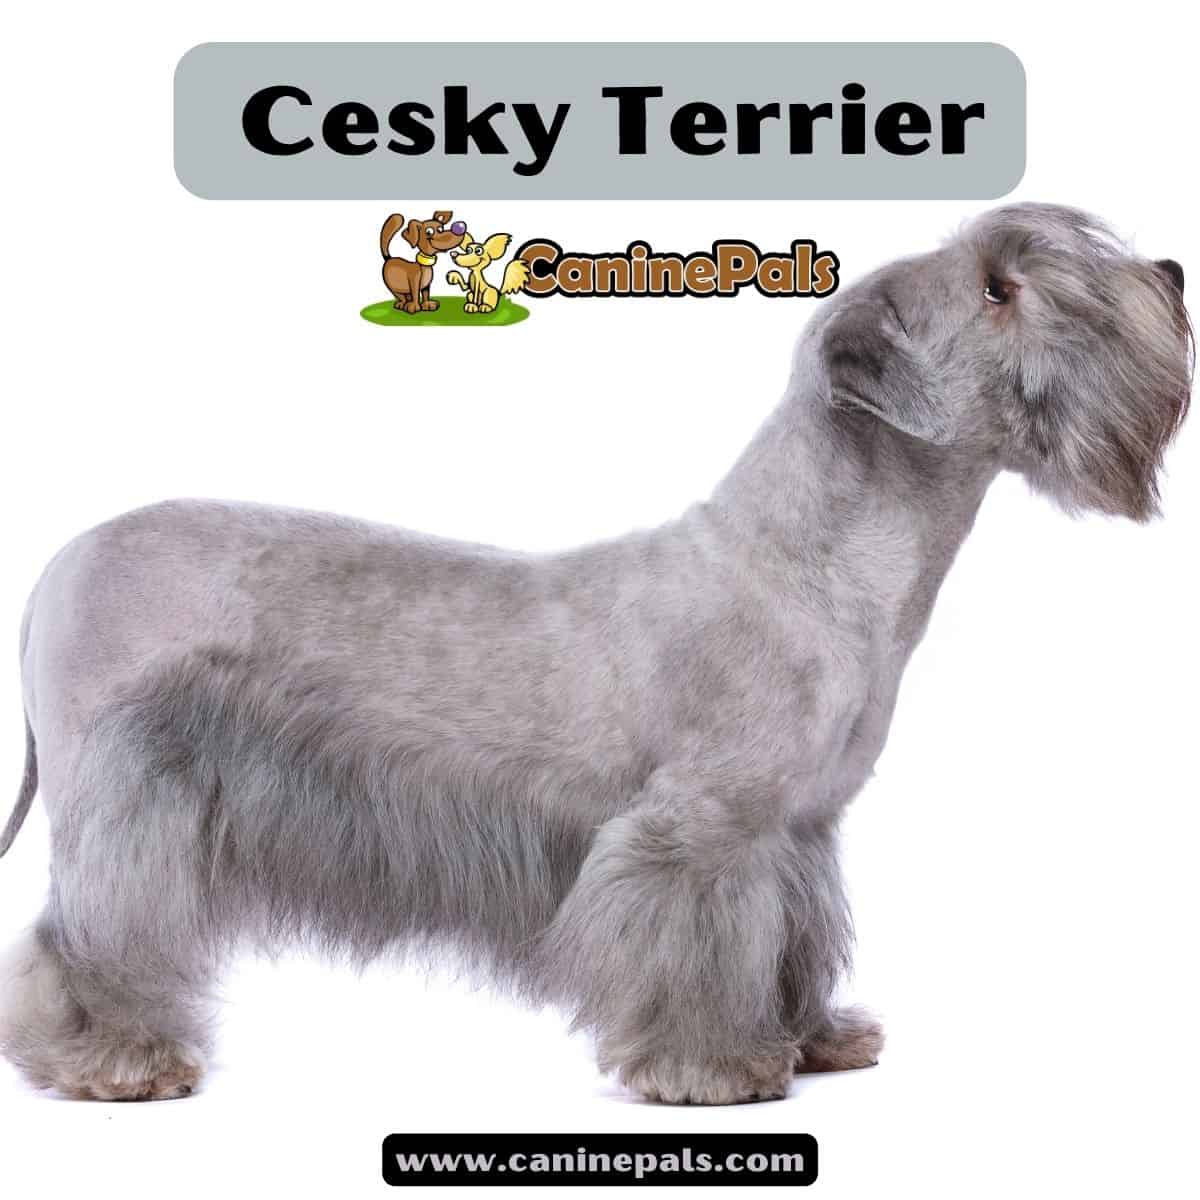 Cesky Terrier